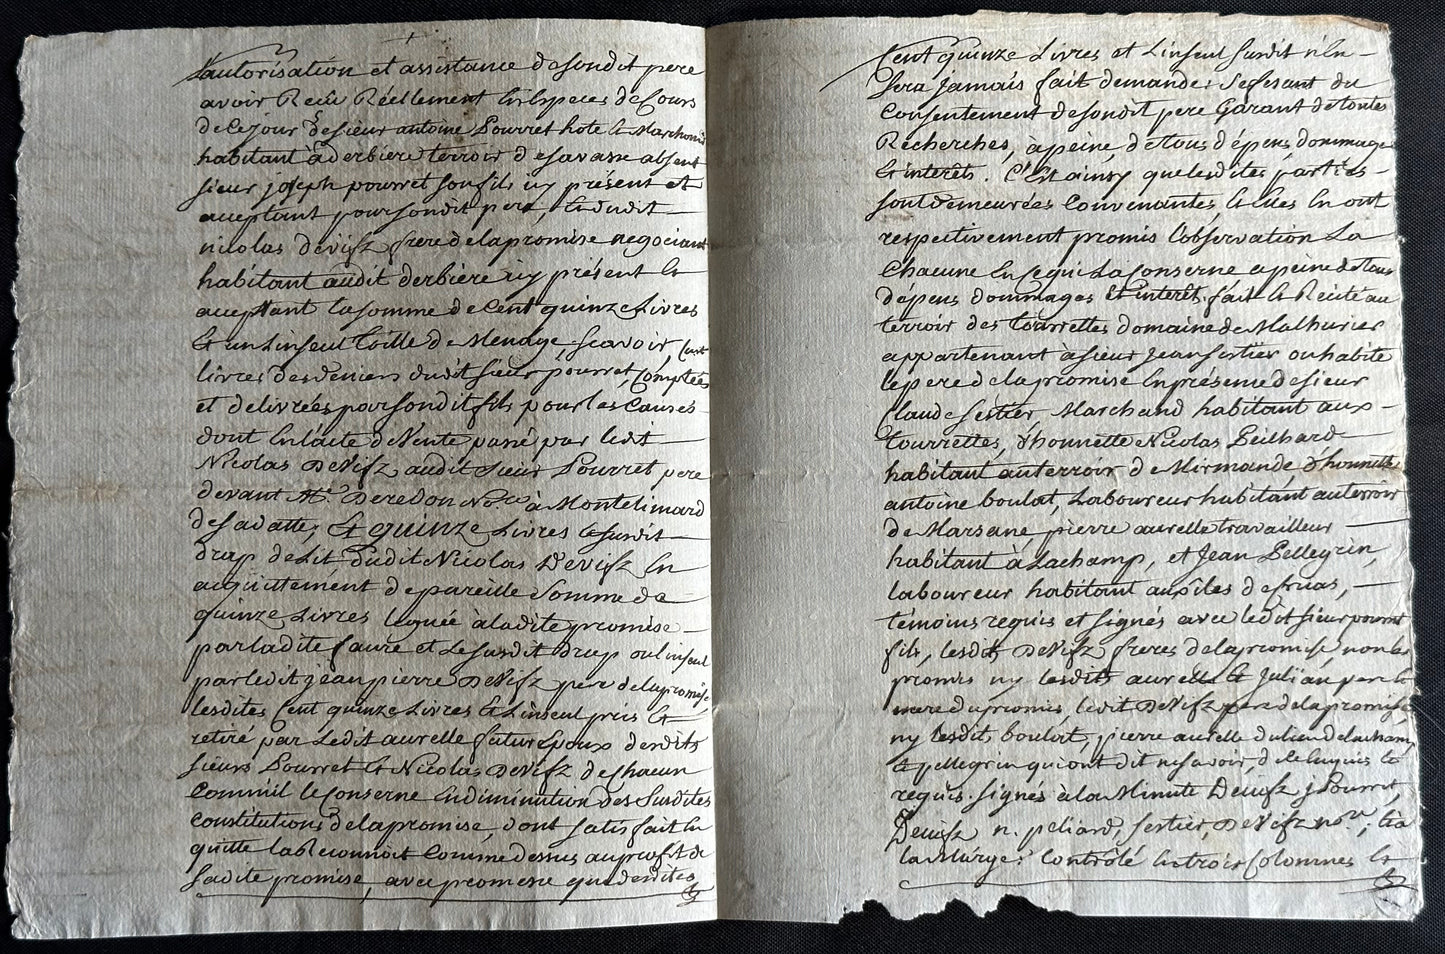 1762 French Manuscript